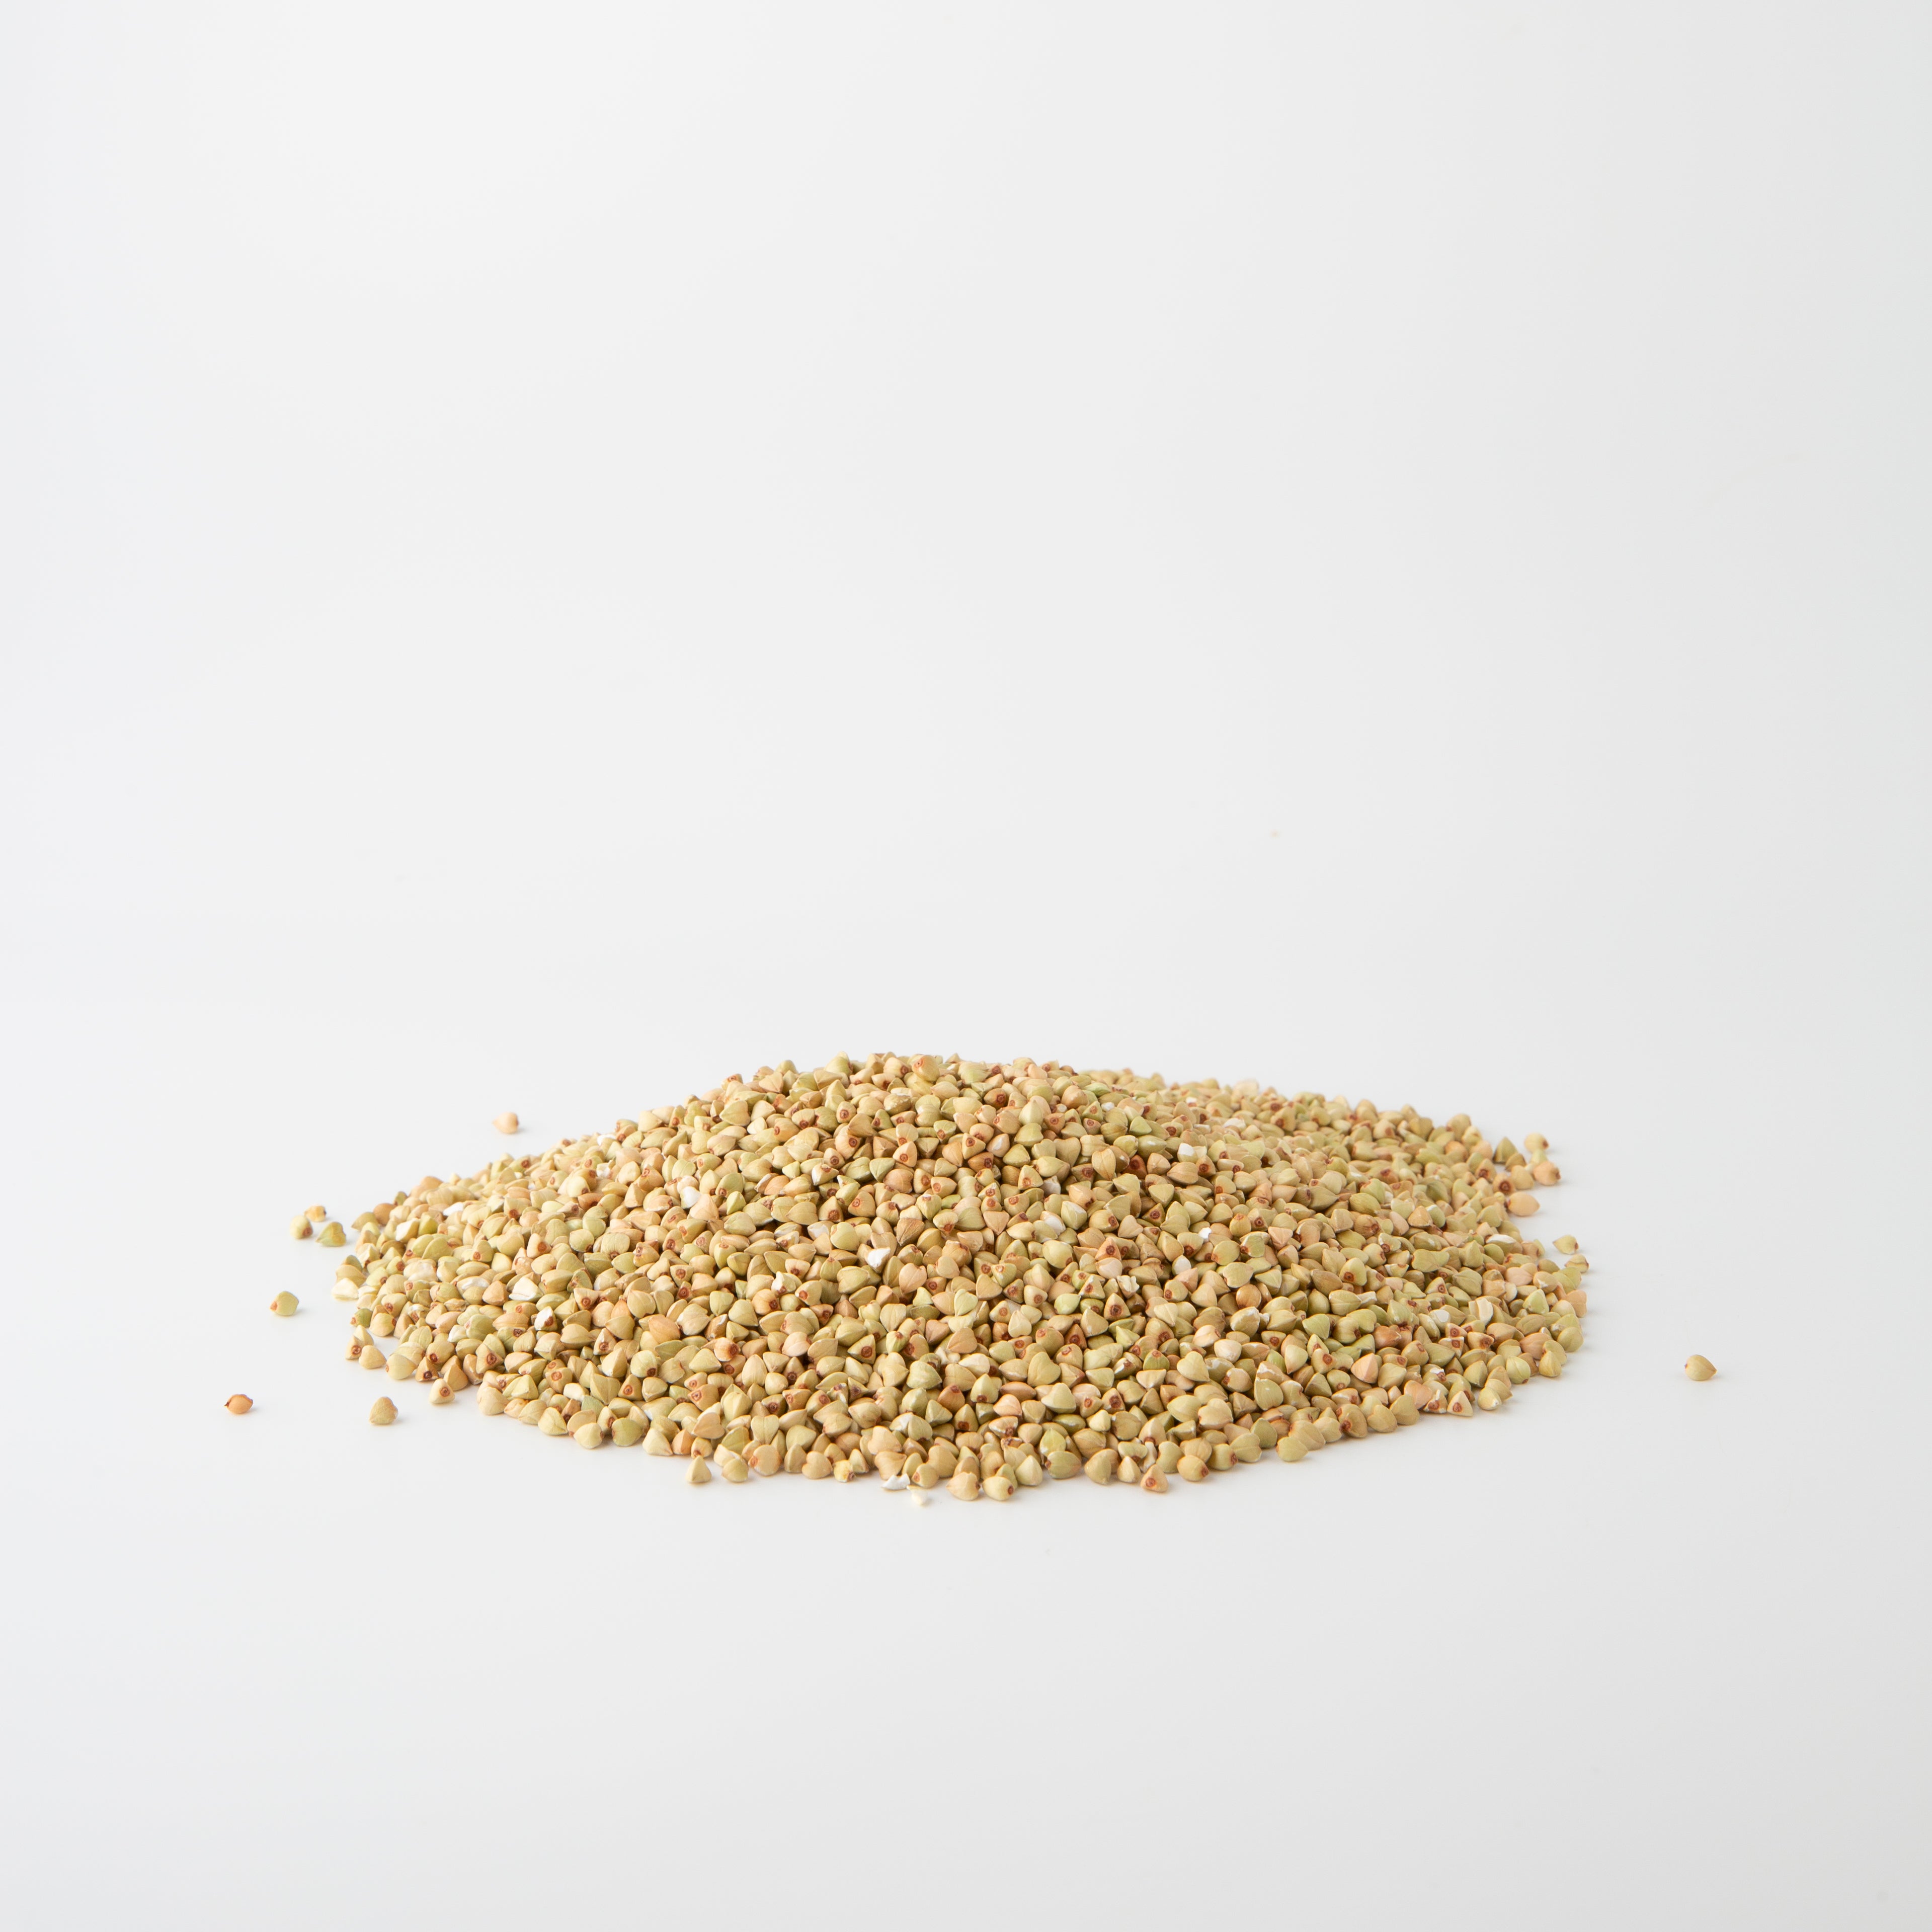 Organic Hulled Buckwheat (Grains) Image 3 - Naked Foods